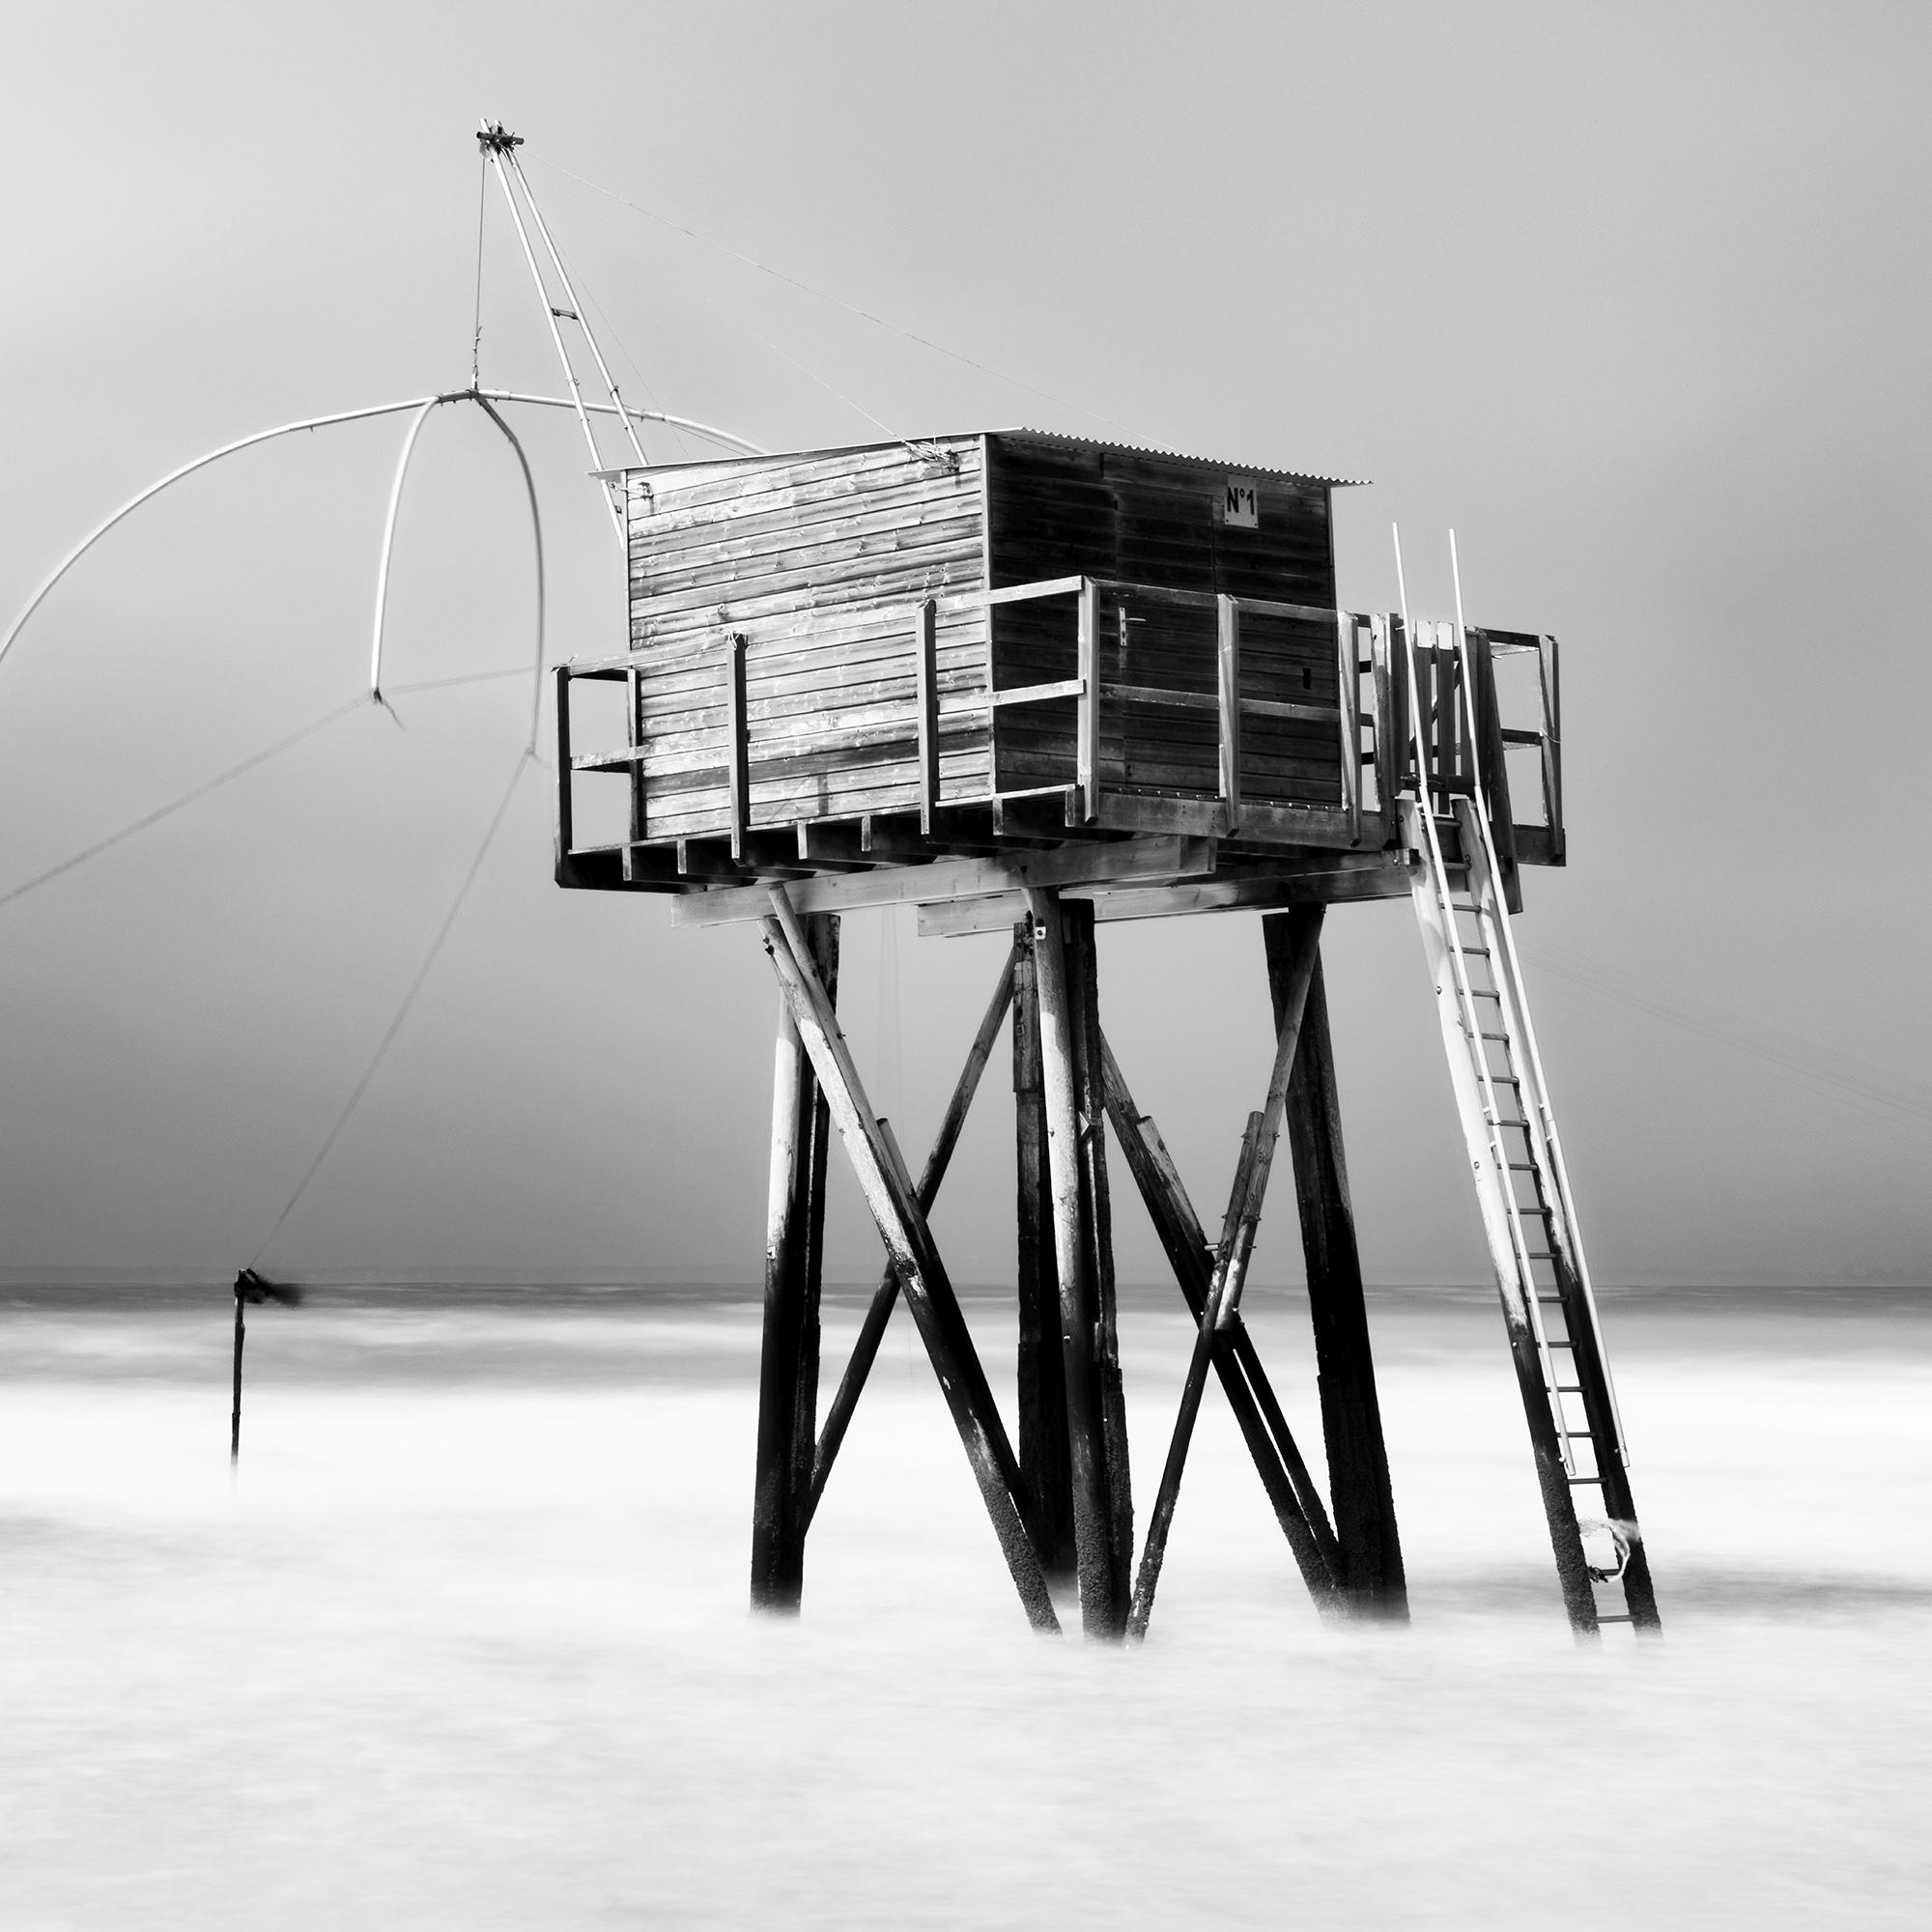 Fishing Hut On Stilts, surf, shoreline, storm, black white landscape photography For Sale 4